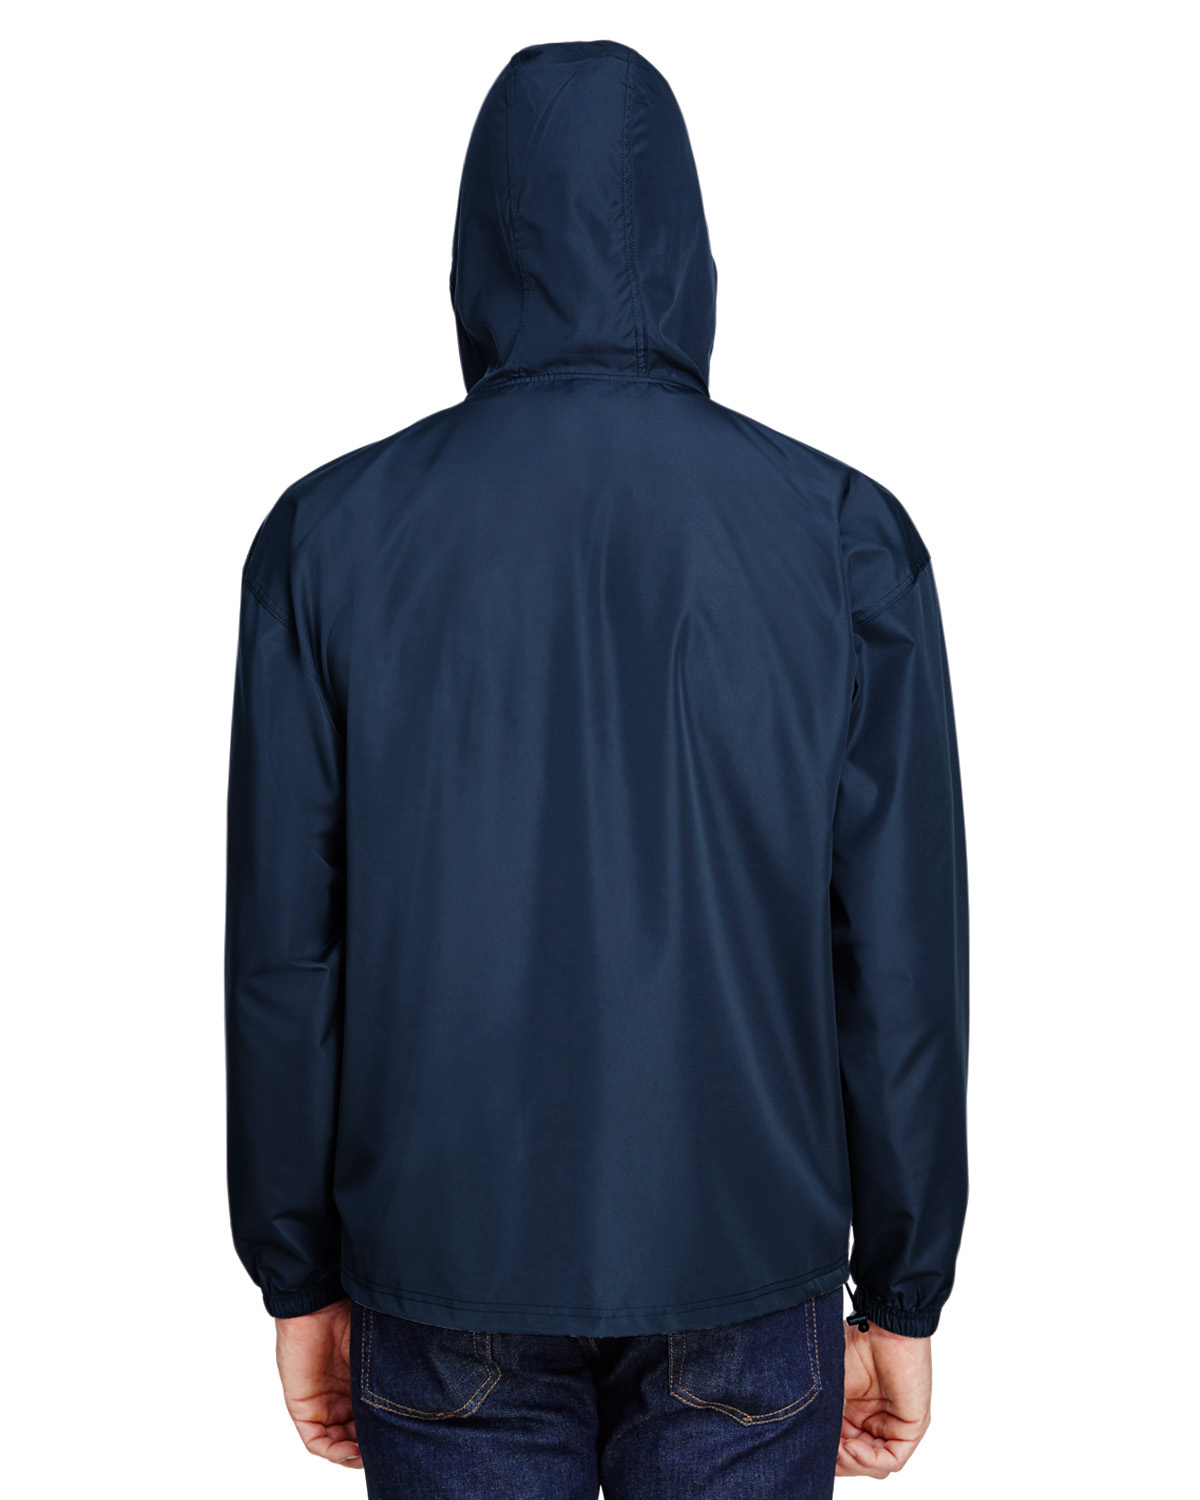 Champion CO200 Navy Adult Packable Anorak 1/4 Zip Jacket | JiffyShirts